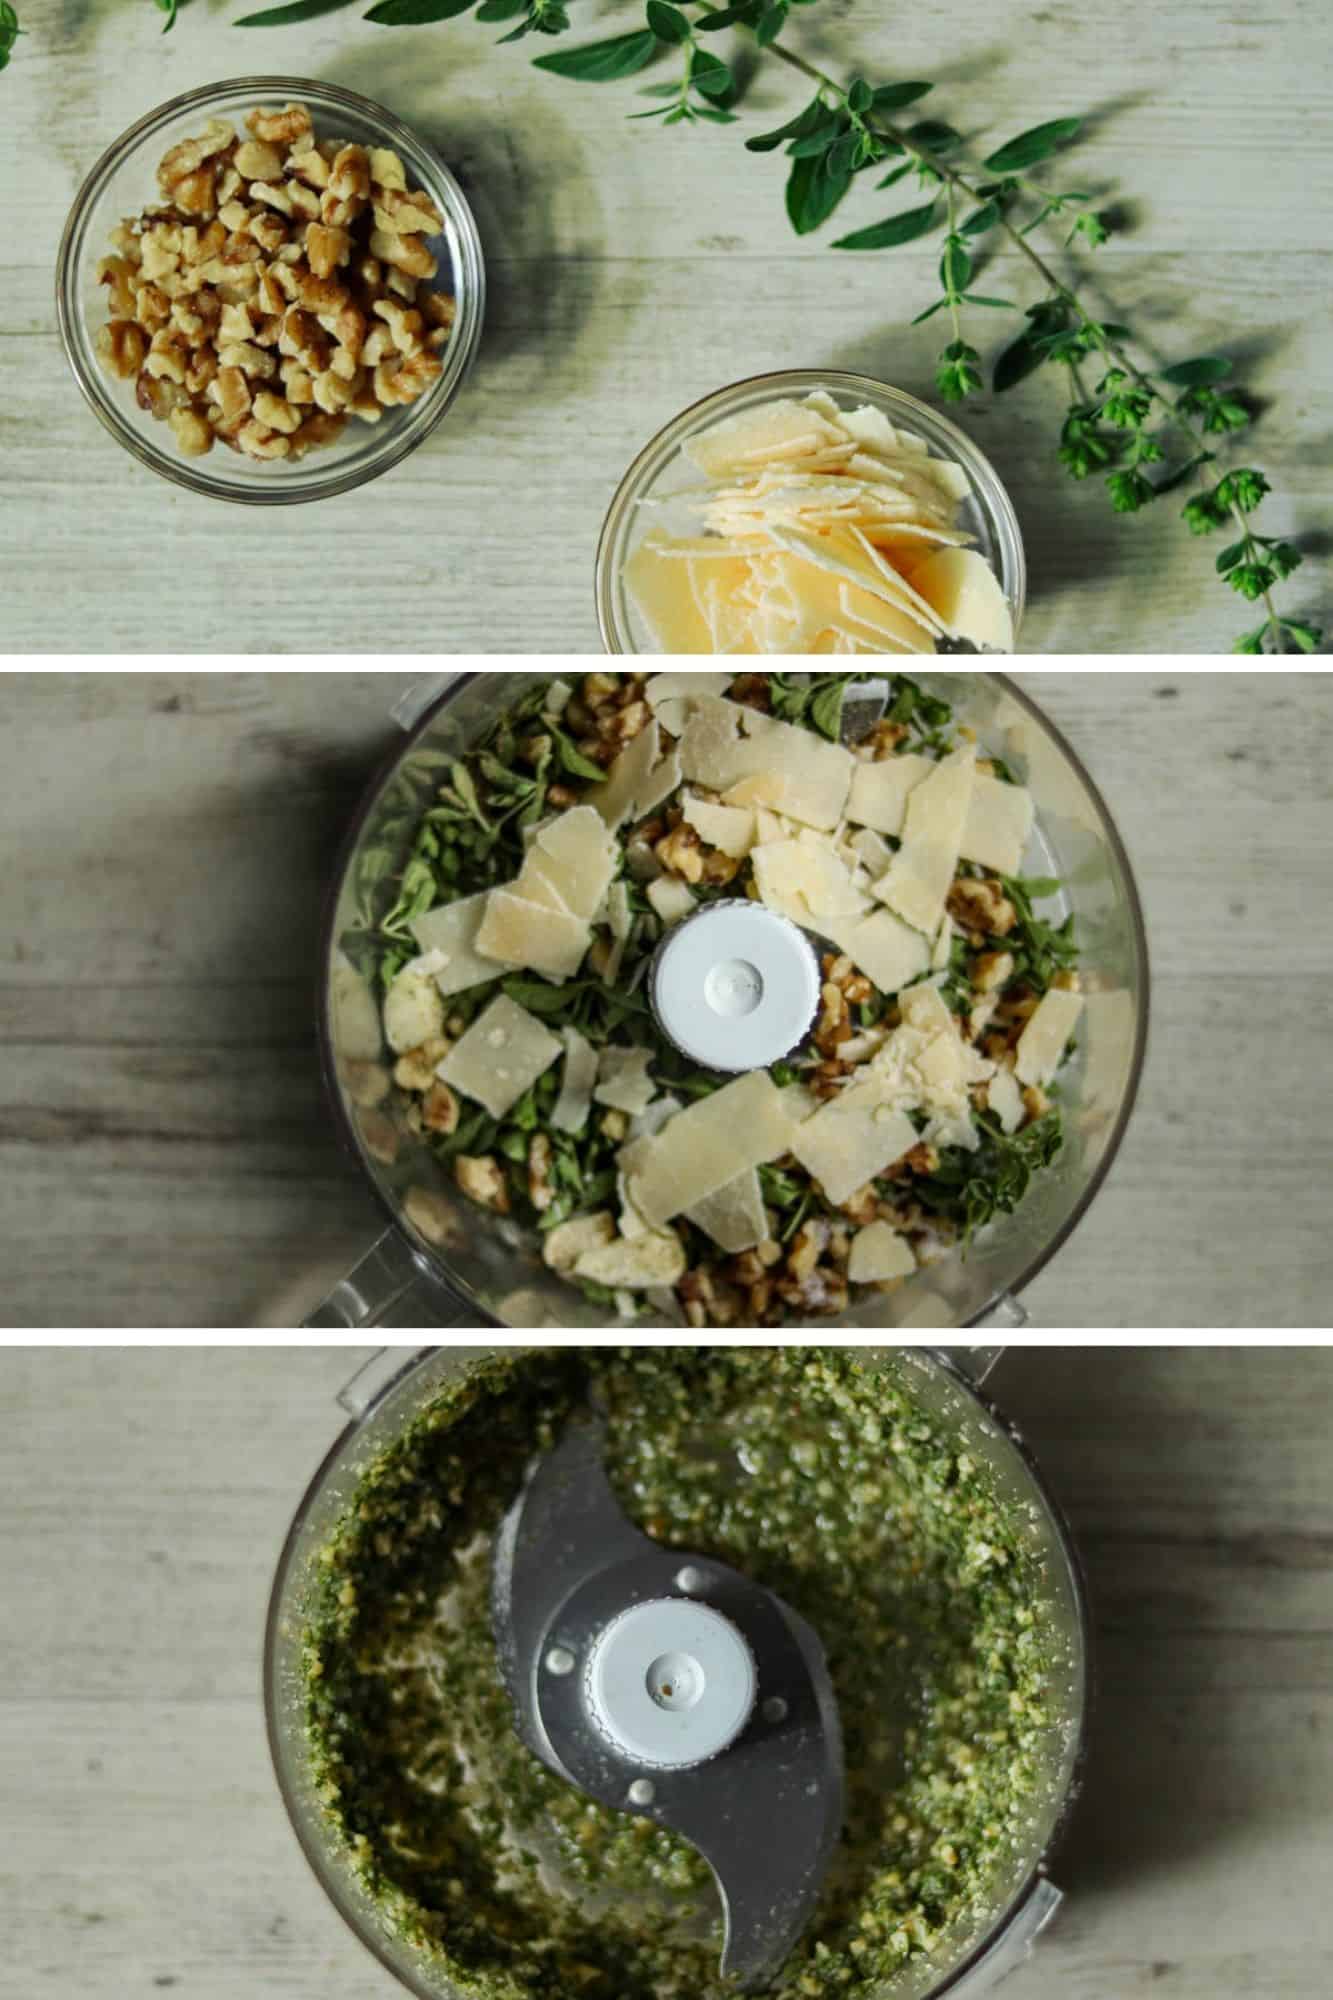 pictures showing oregano pesto ingredients and steps to make the pesto